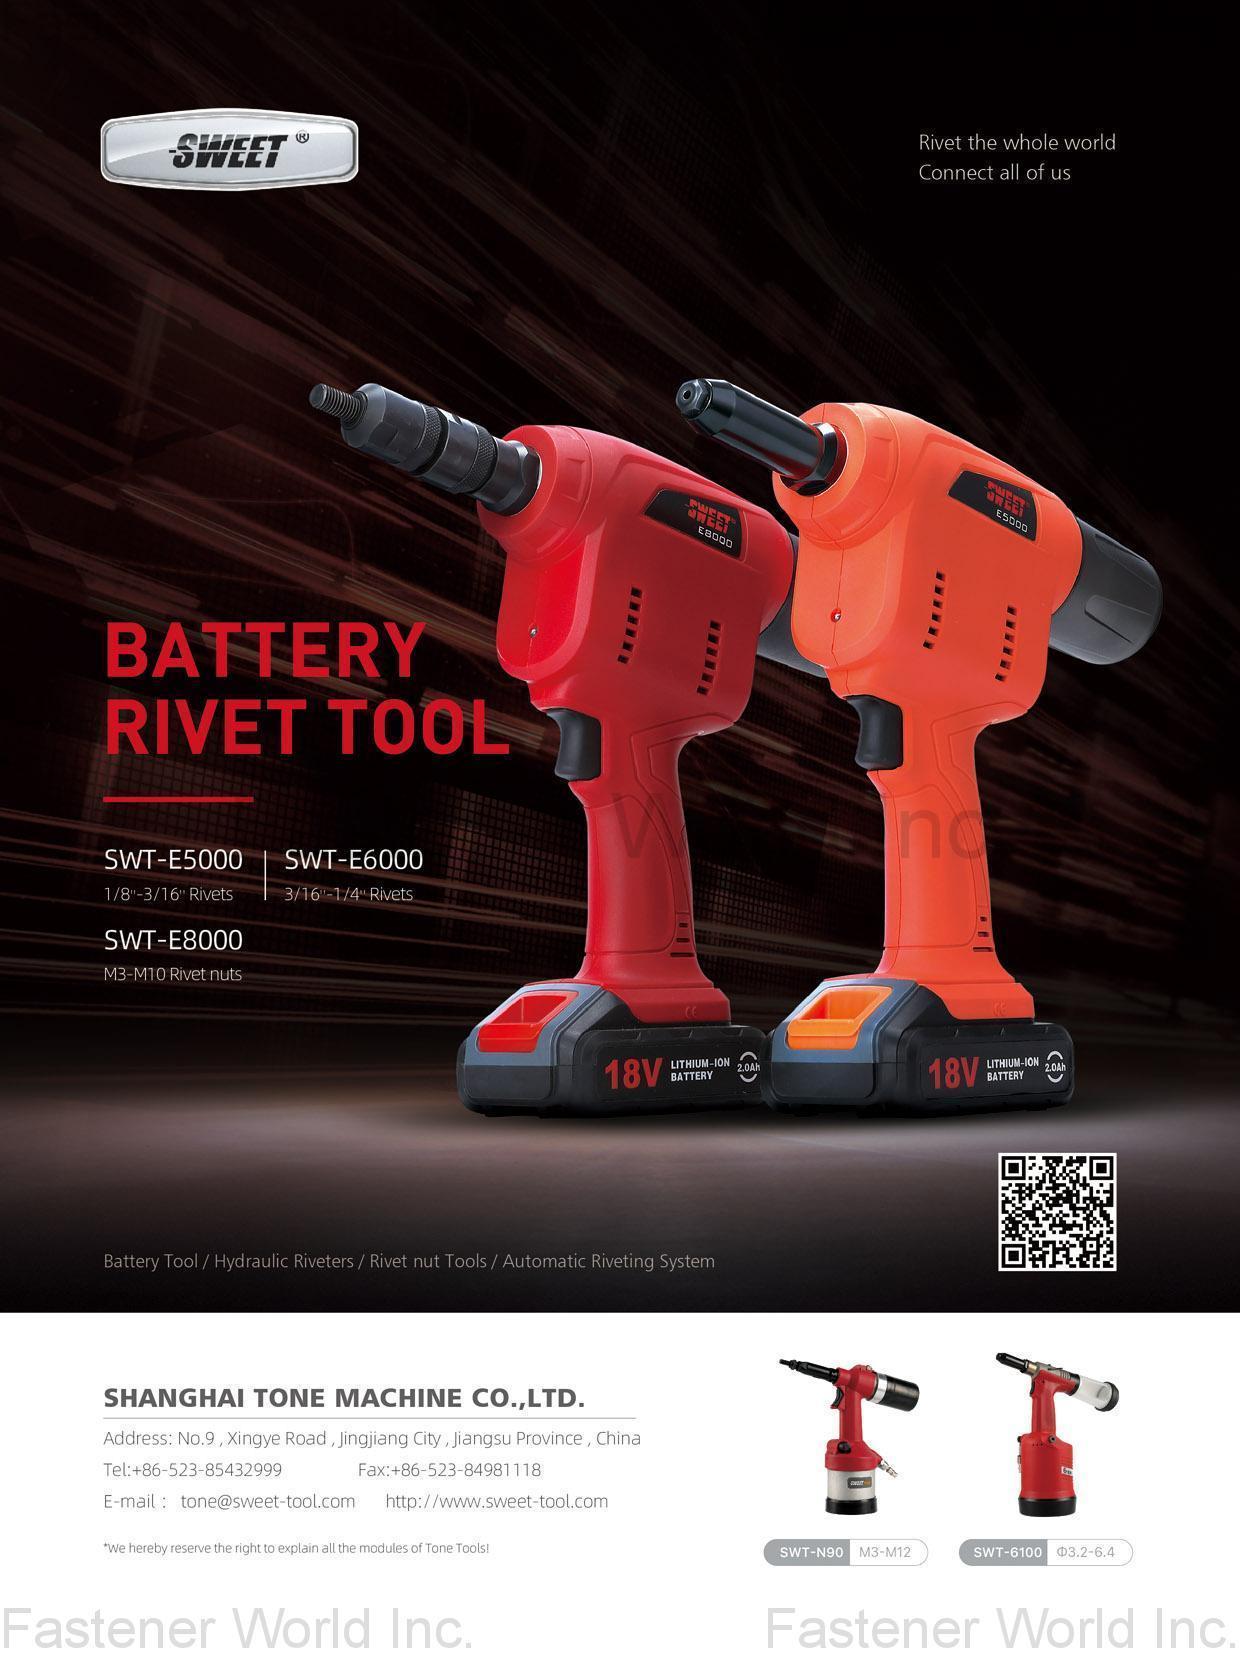 SHANGHAI TONE MACHINE CO., LTD. , Battery Rivet Tool , Hand Rivet Tools, Hand Rivet Nut/rivet Bolt Tools, Air Hydraulic Rivet